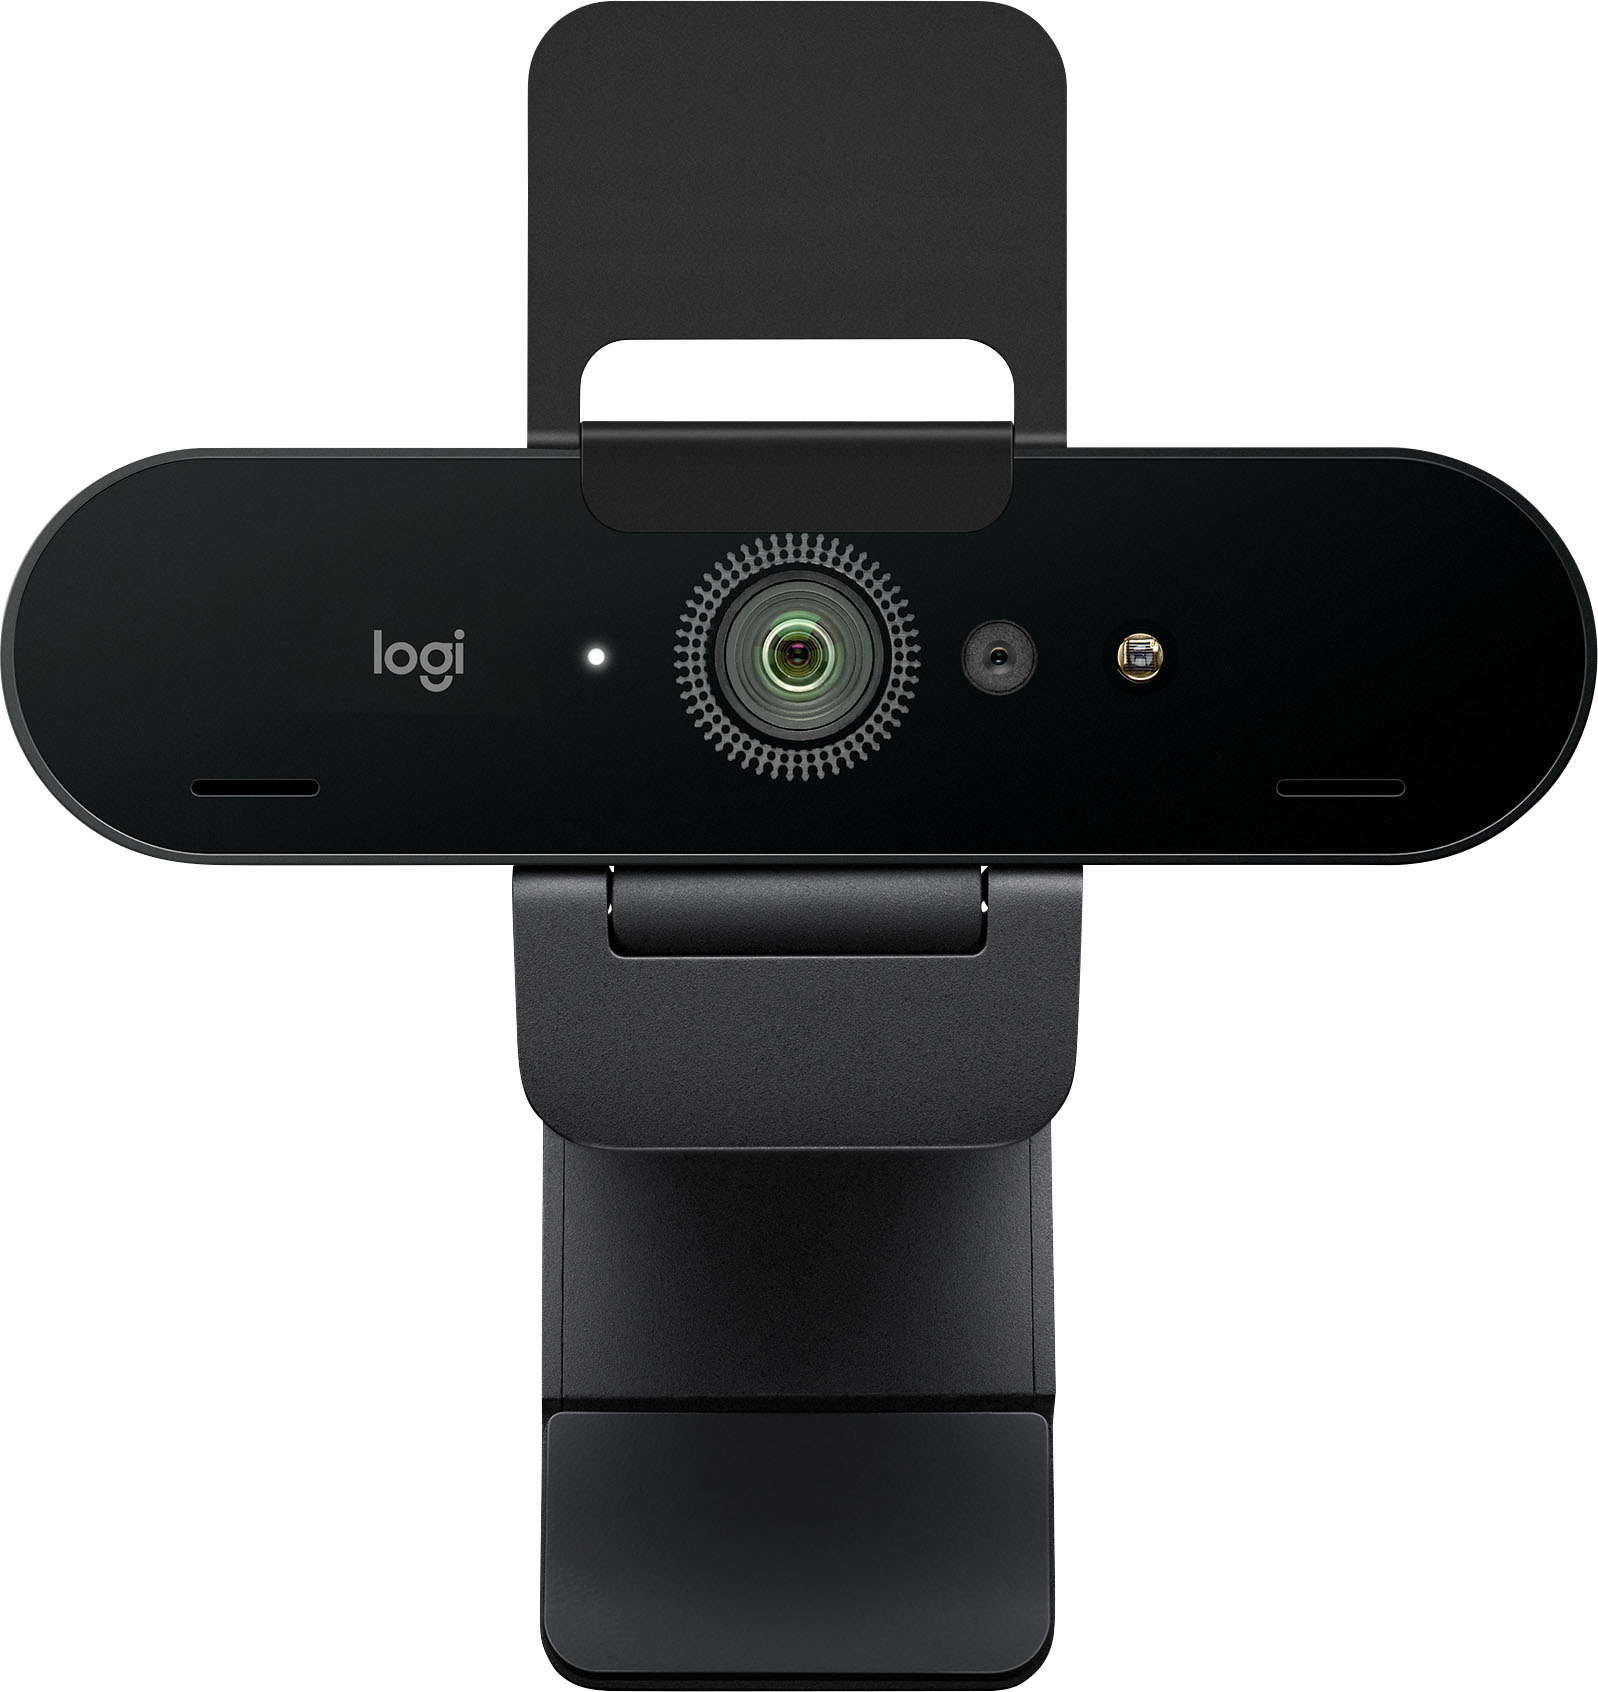 Logitech 4K 4096 x 2160 Webcam with Noise-Canceling Black 960-001390 - Best